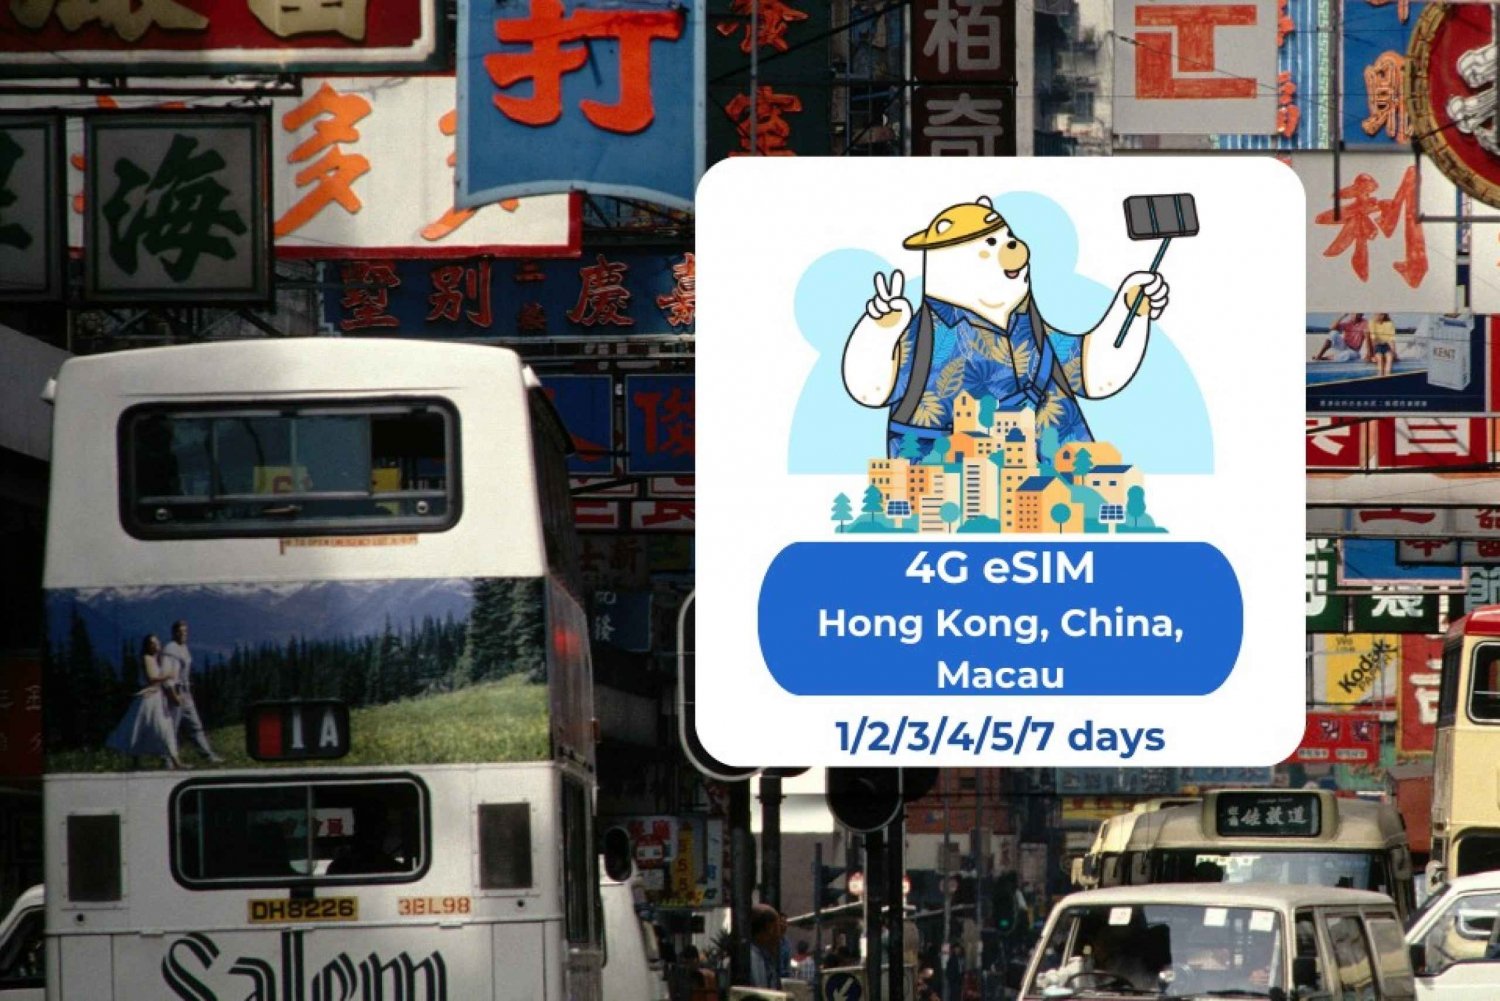 Hong Kong - Chine - Macao : eSIM Mobile Data 1/2/3/4/5/7 jours